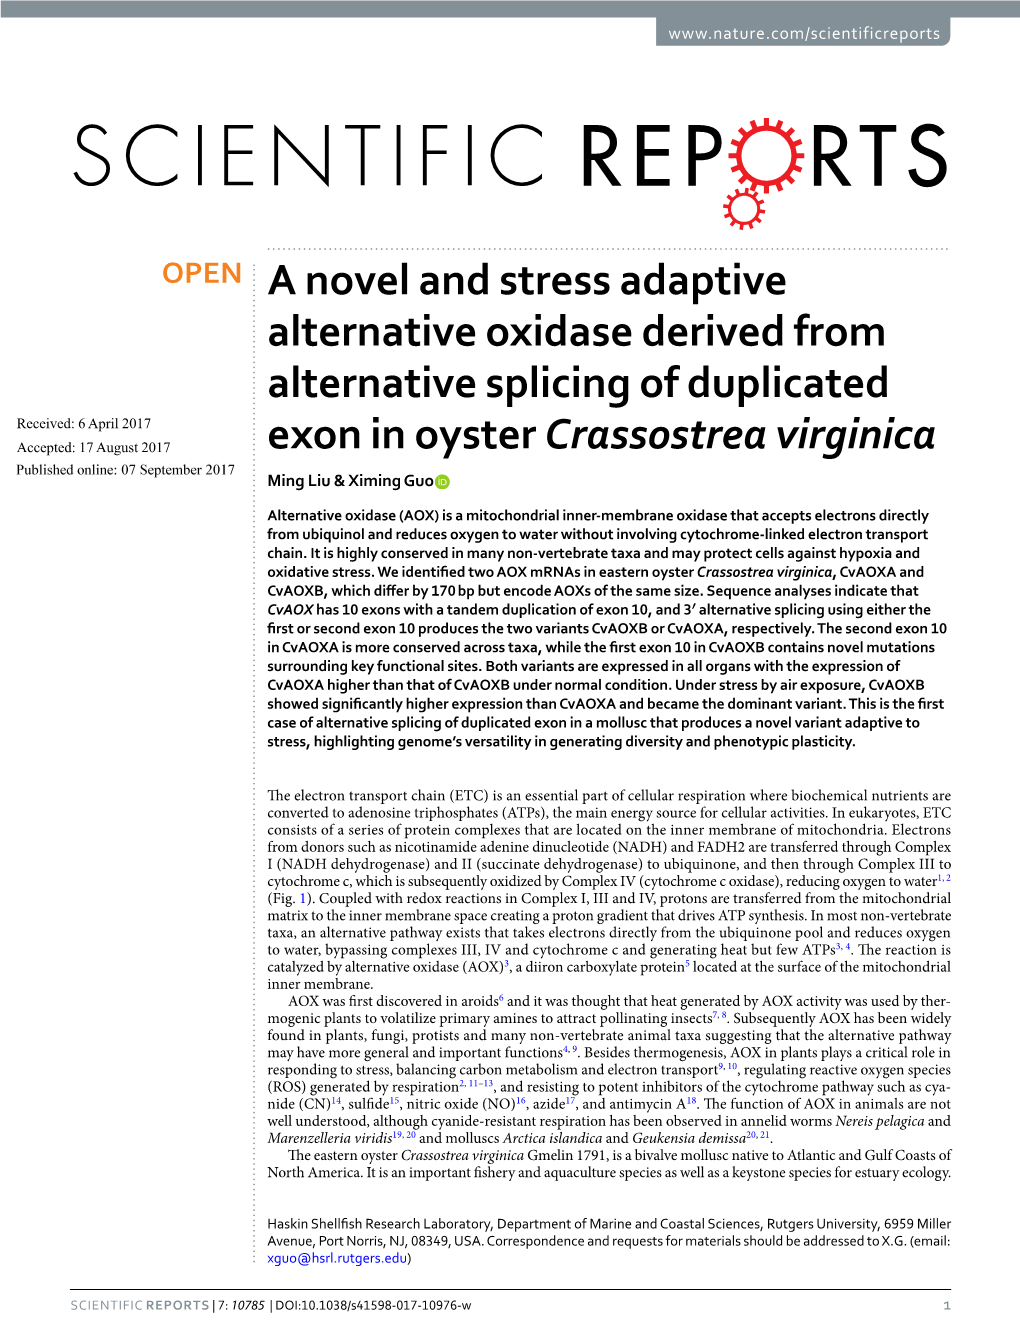 A Novel and Stress Adaptive Alternative Oxidase Derived